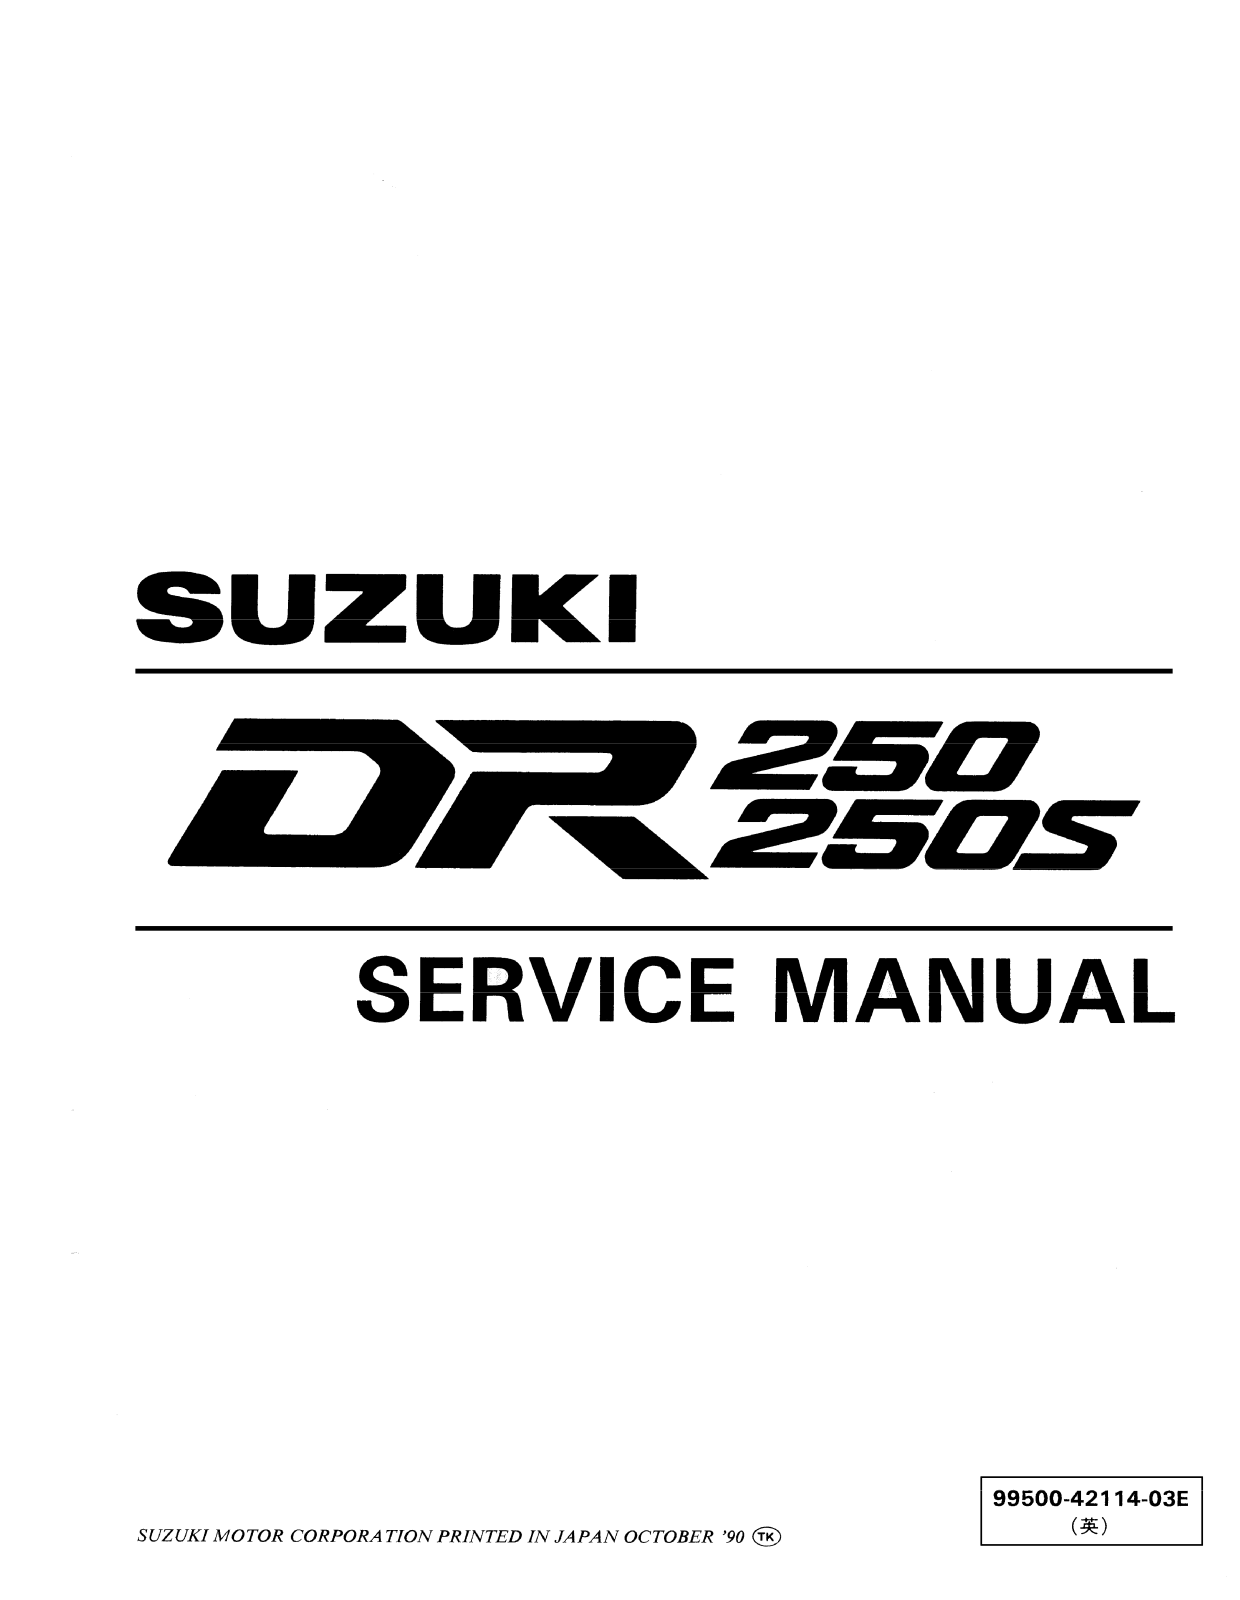 Suzuki DR250 Service Manual